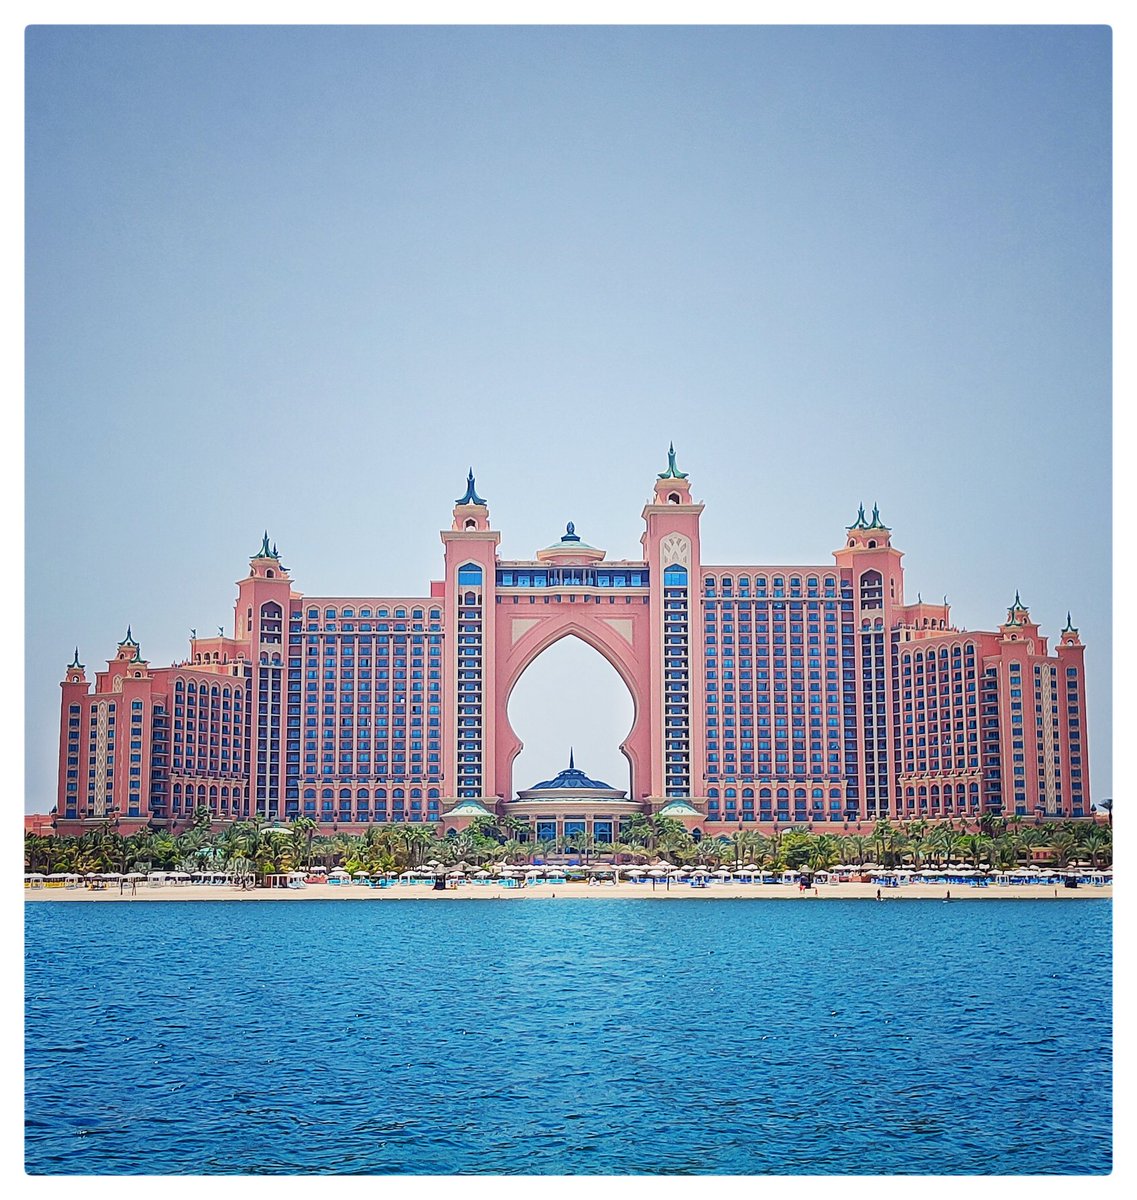 Dive into a world of luxury and enchantment at The Atlantis in Dubai.
#AtlantisDubai
#LuxuryEscape
#DubaiParadise
#TravelGoals
#LuxuryTravel
#Wanderlust
#DreamVacation
#OceanRetreat
#DubaiAdventures
#ExoticGetaway
#ExploreDubai
#UnforgettableExperiences